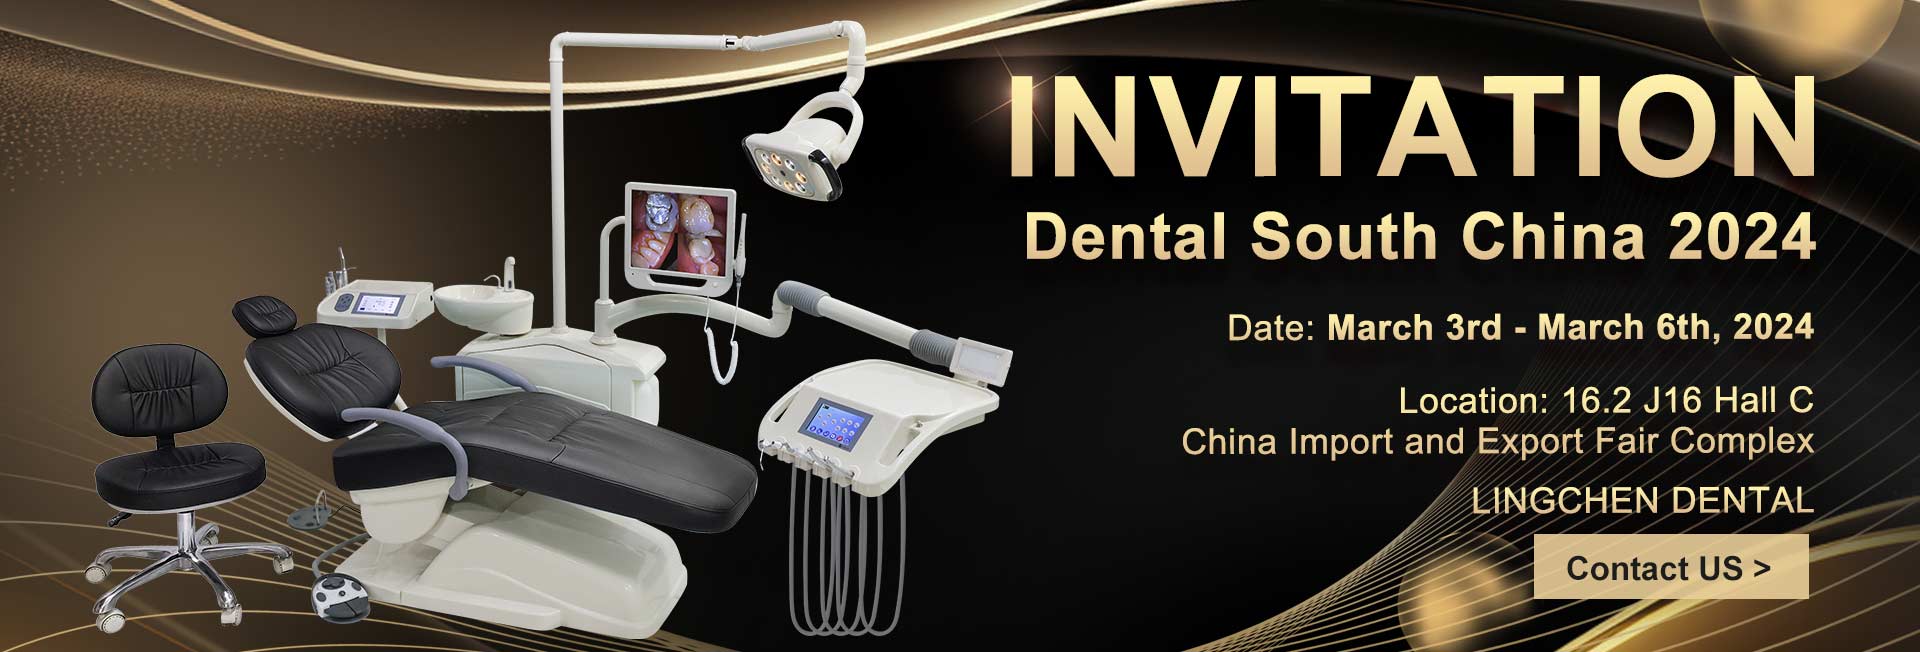 Dental South China Invitation 2024